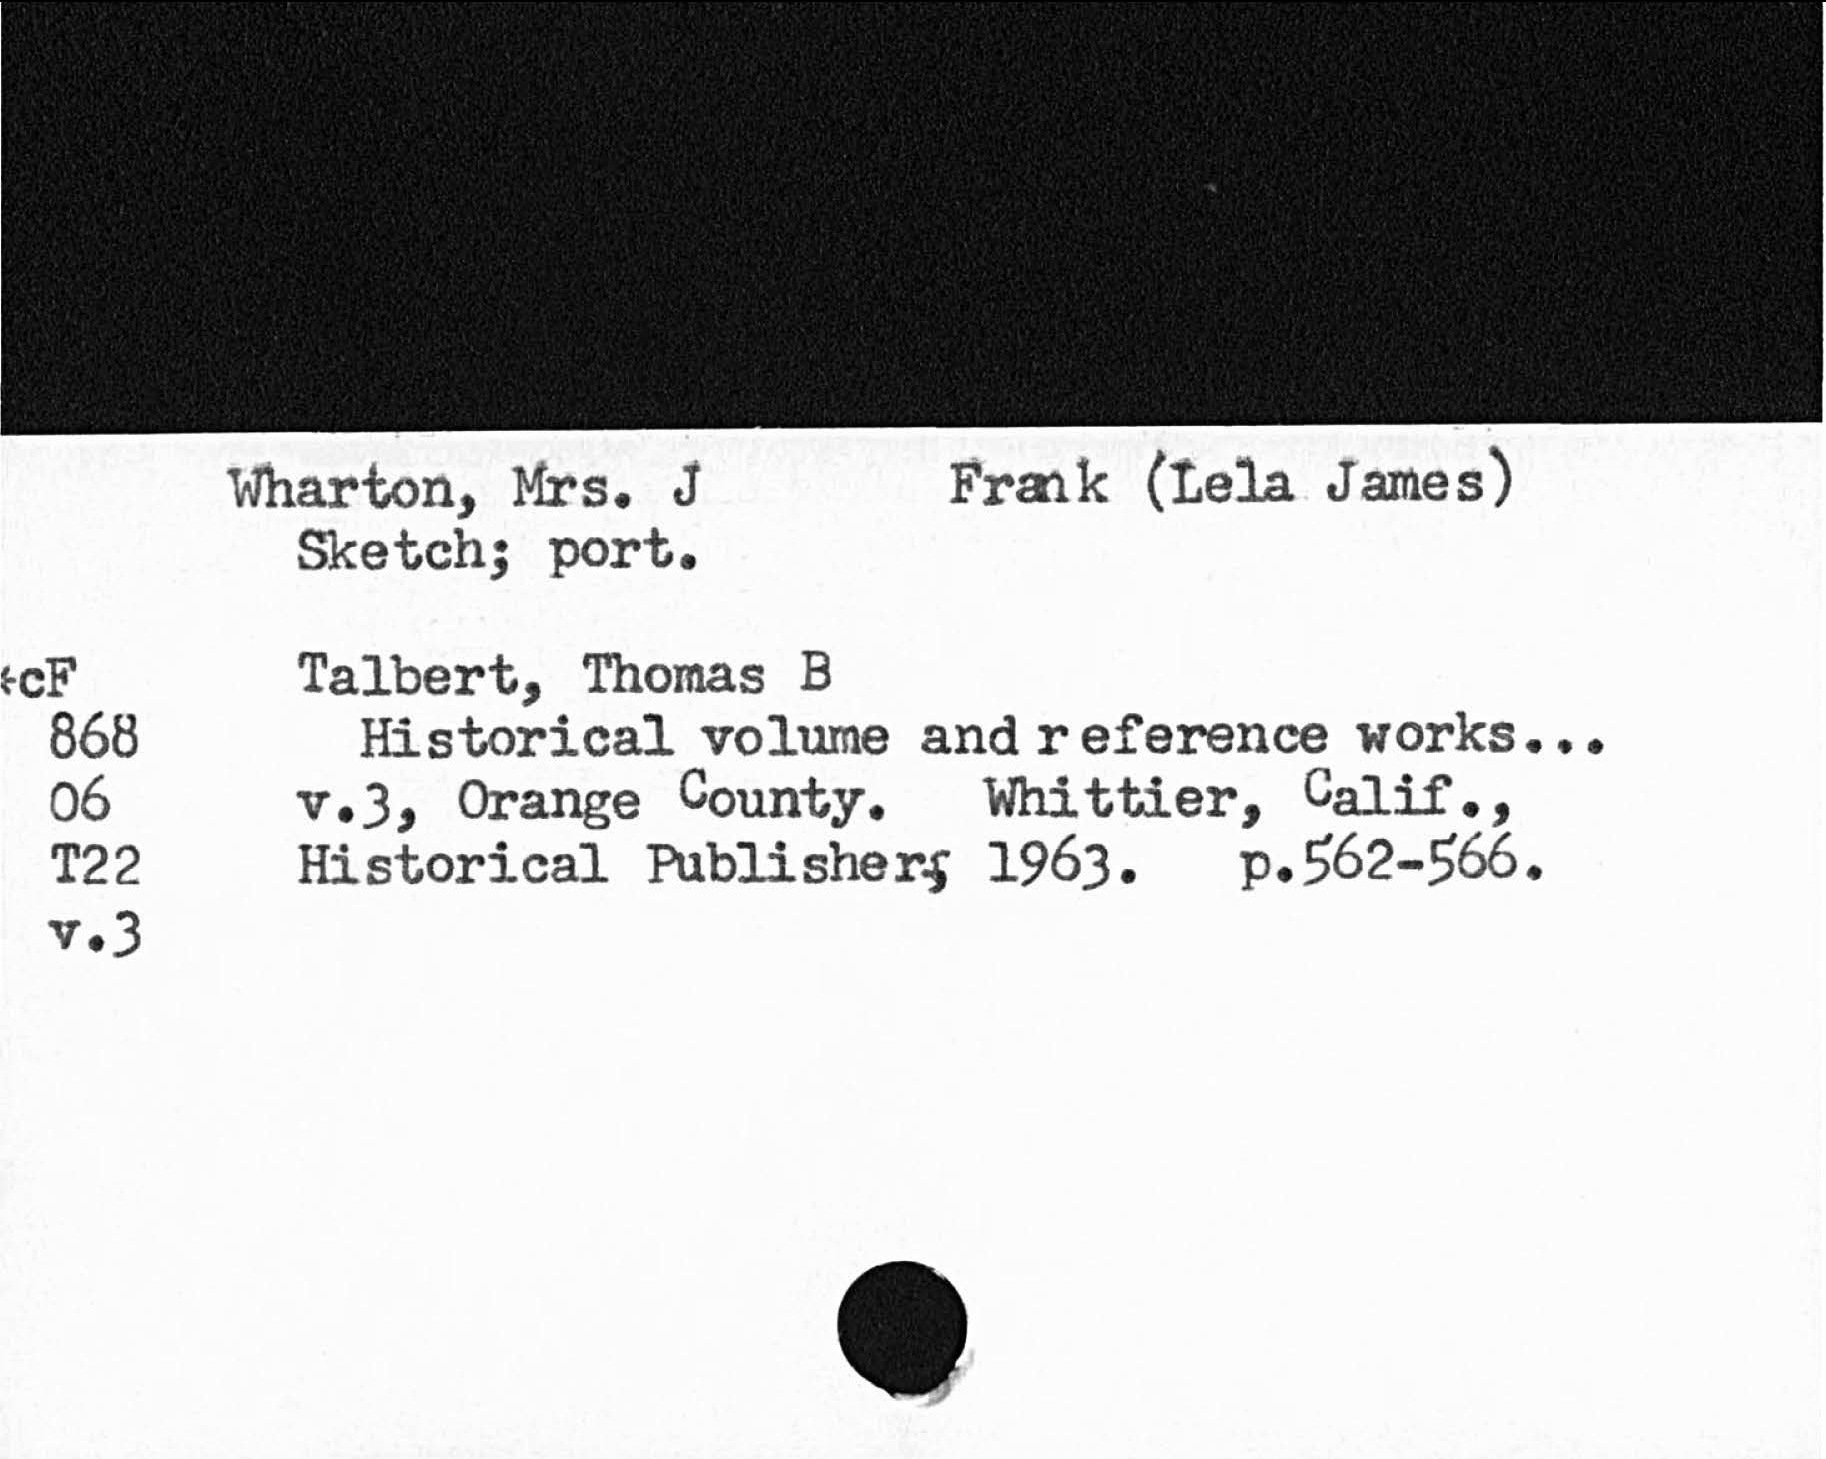 Wharton, Mrs. J Frank Lela. JamesSketch; port.E- cF Talbert, Thomas BHistorical volume and reference works6 v. Orange County. Whittier, Calif.Historical Publisher 1963 p. 562- 566.v. J868 T22